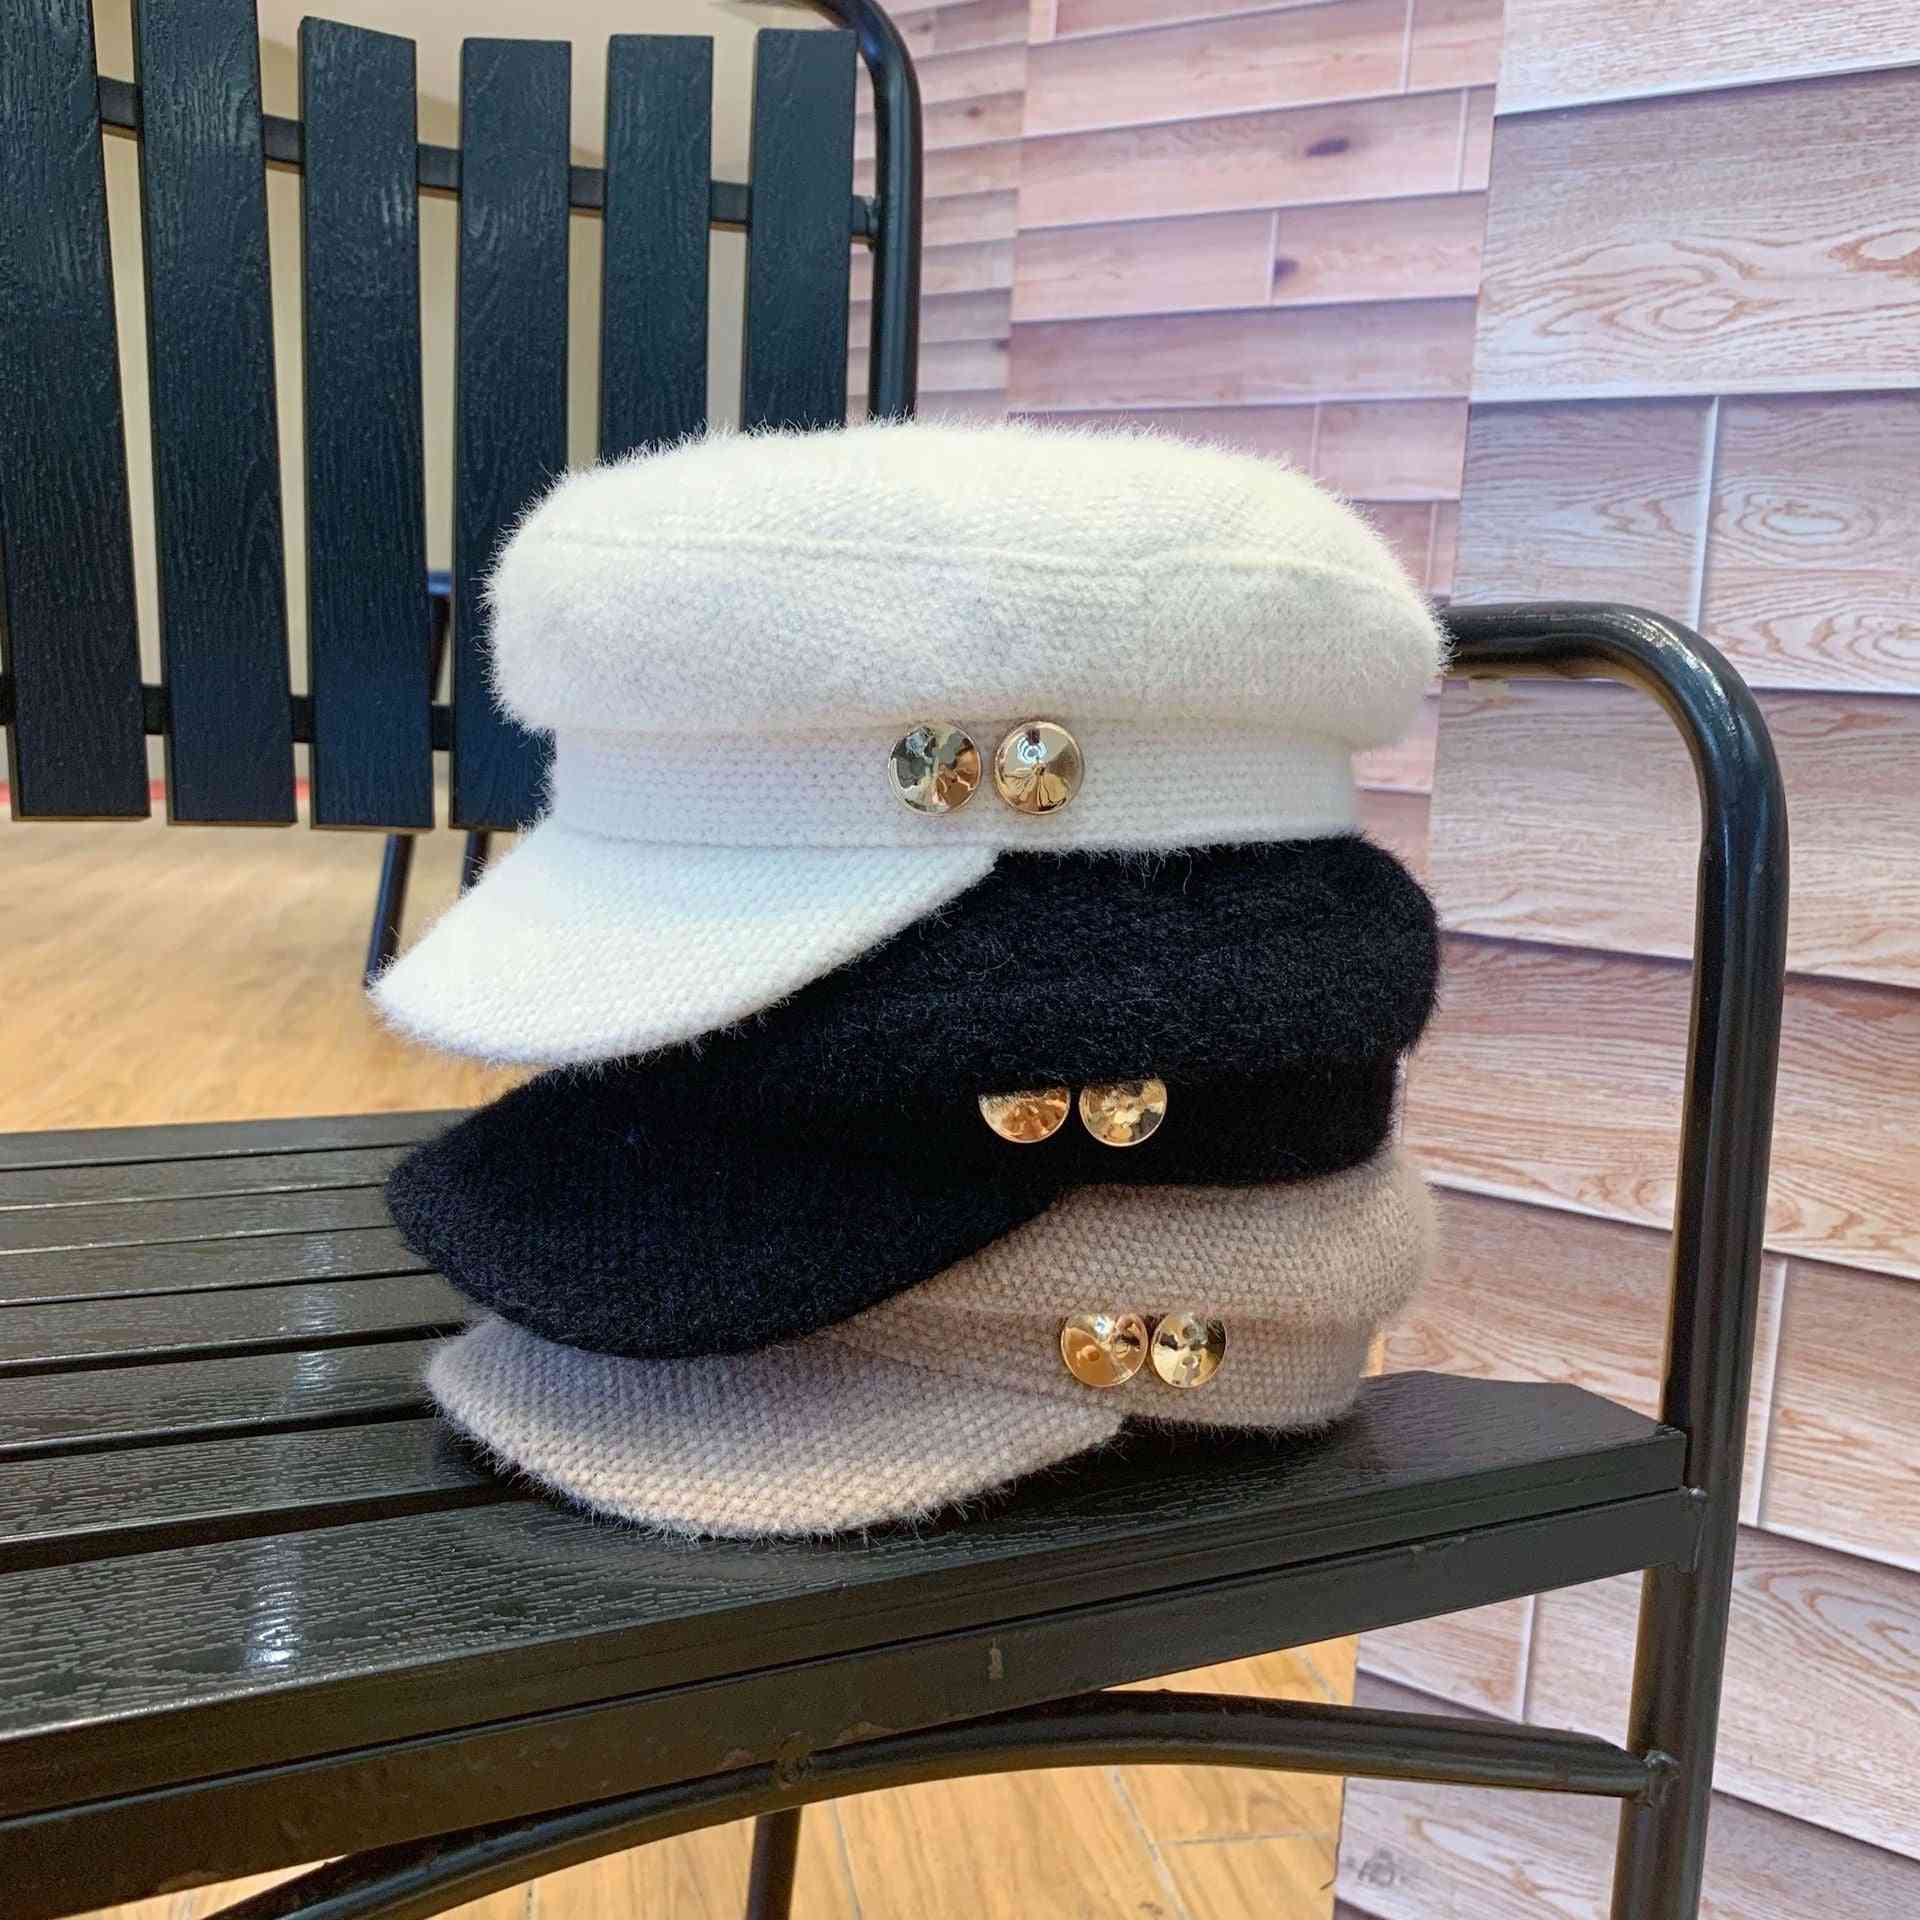 Winter Warm Octagonal Hat, Leisure Visors Cap For Women